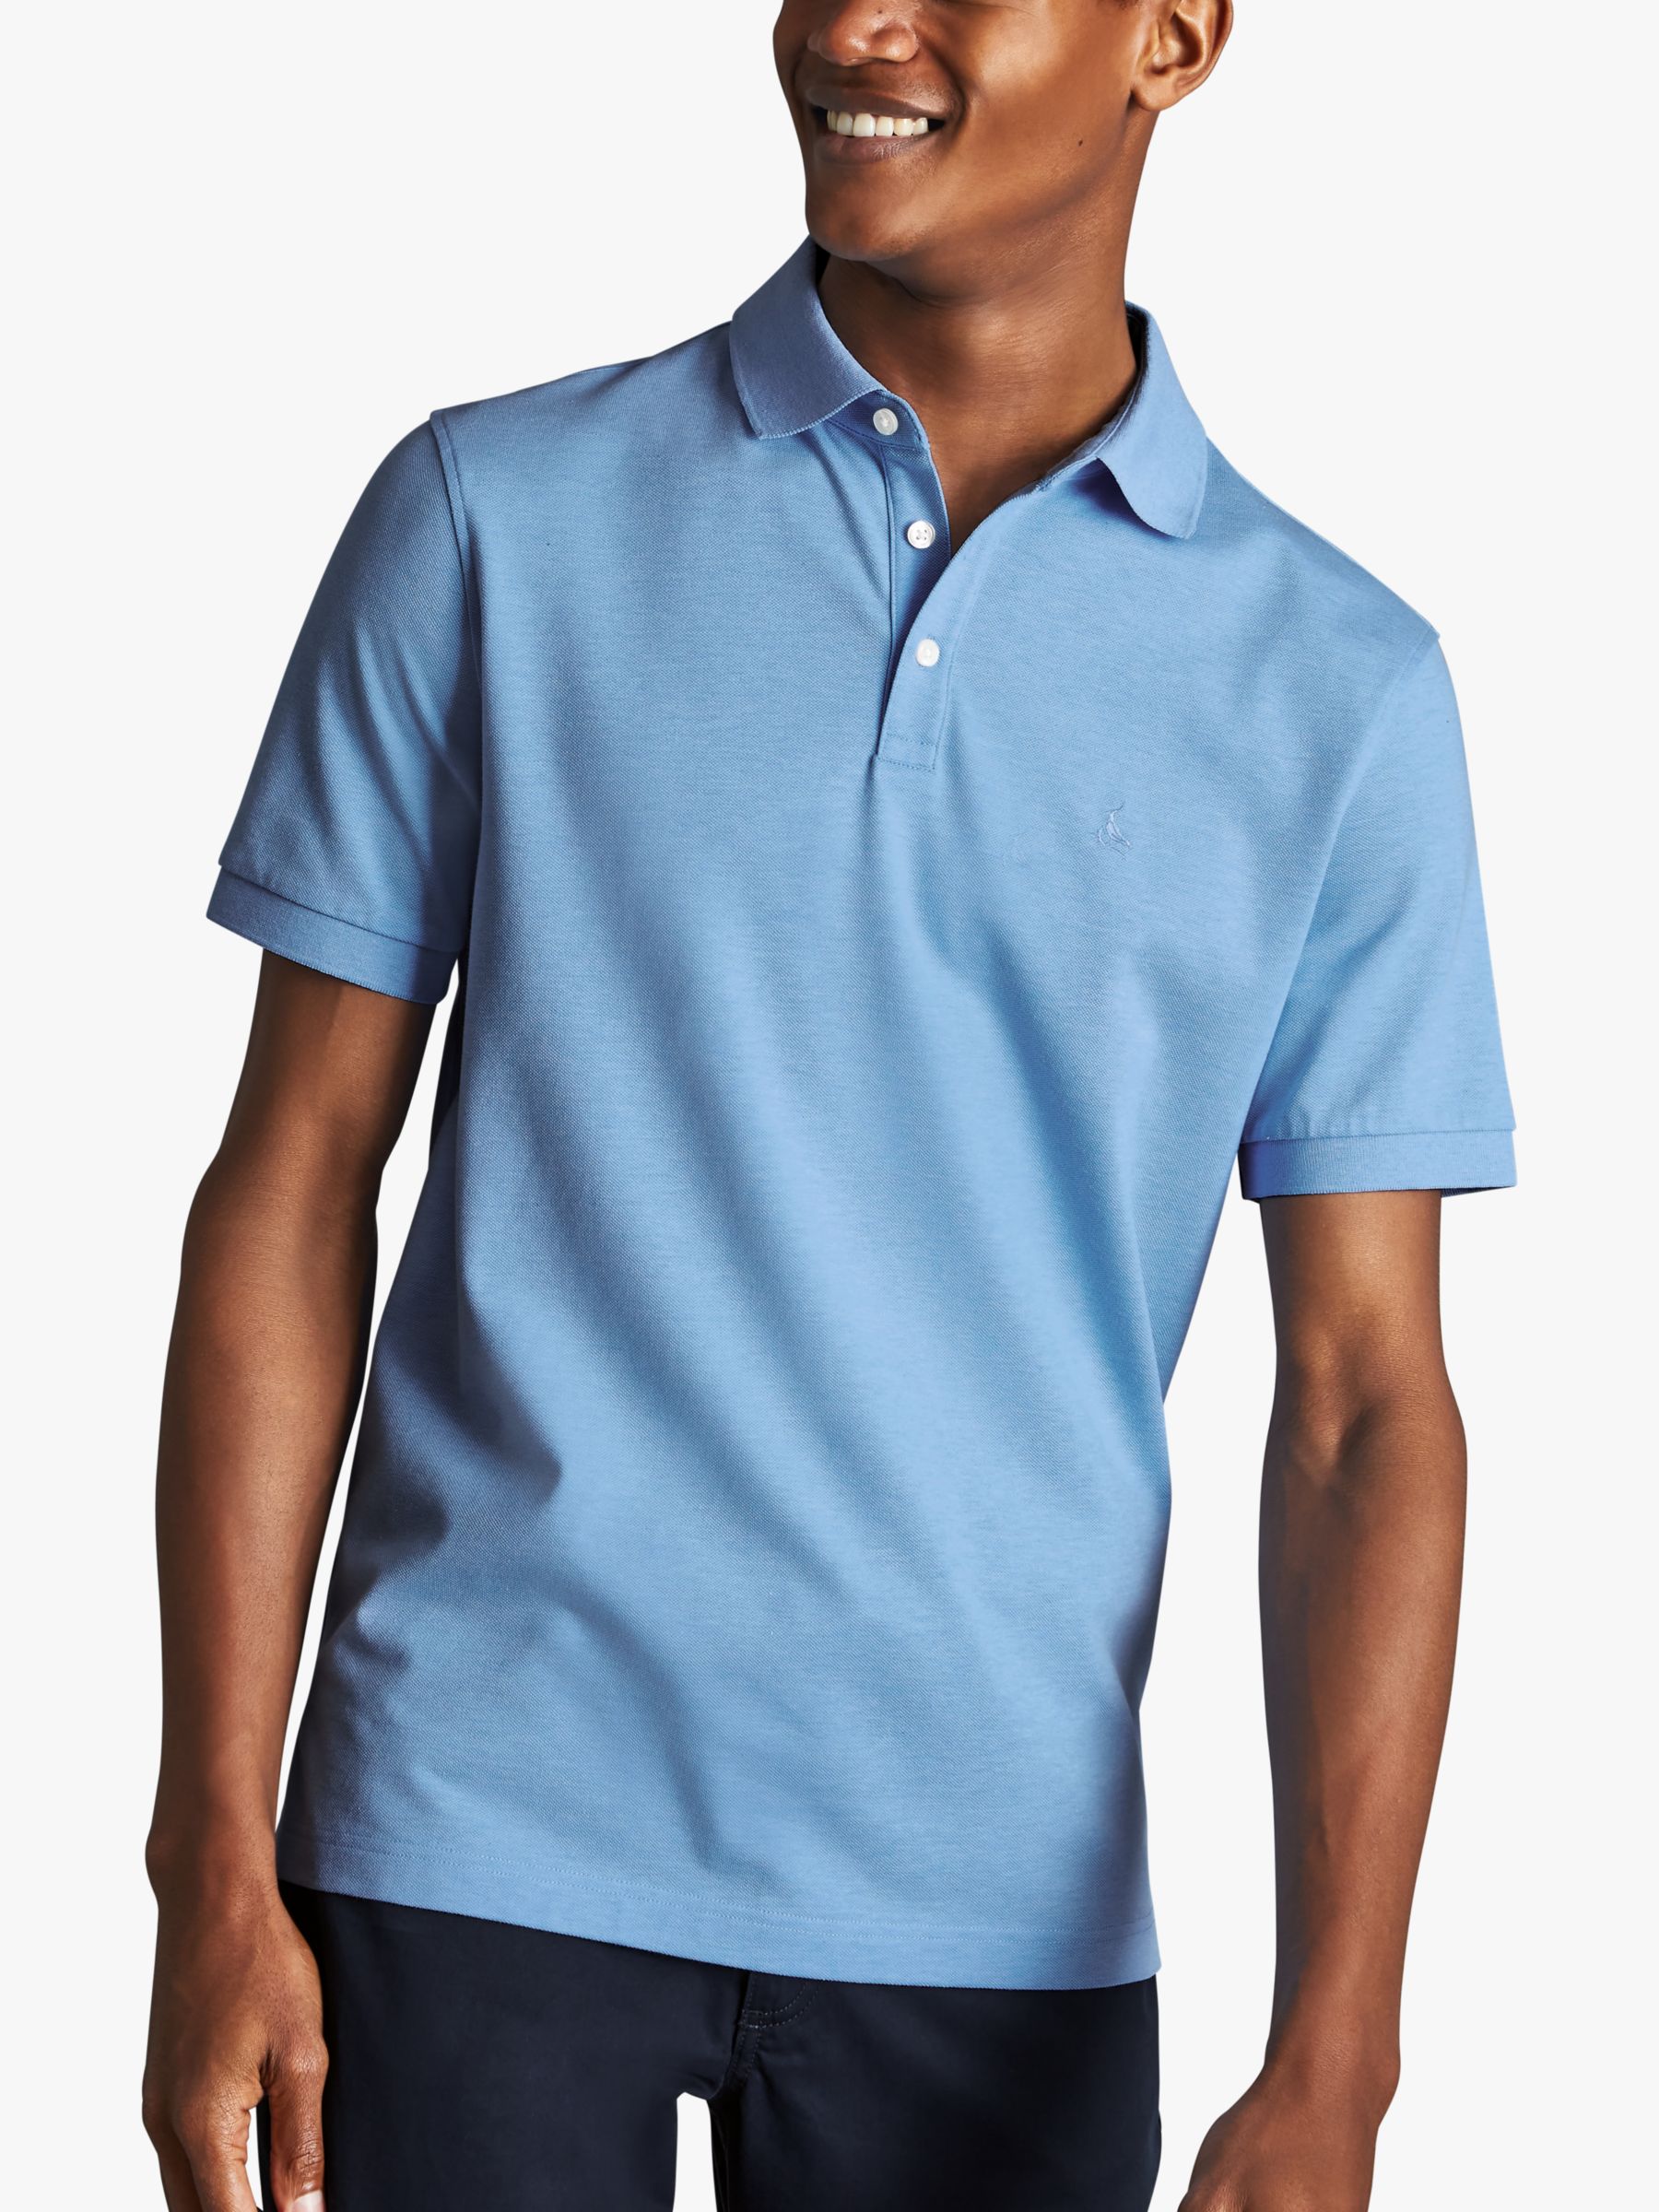 Charles Tyrwhitt Pique Polo Shirt, Light Blue Marl at John Lewis & Partners